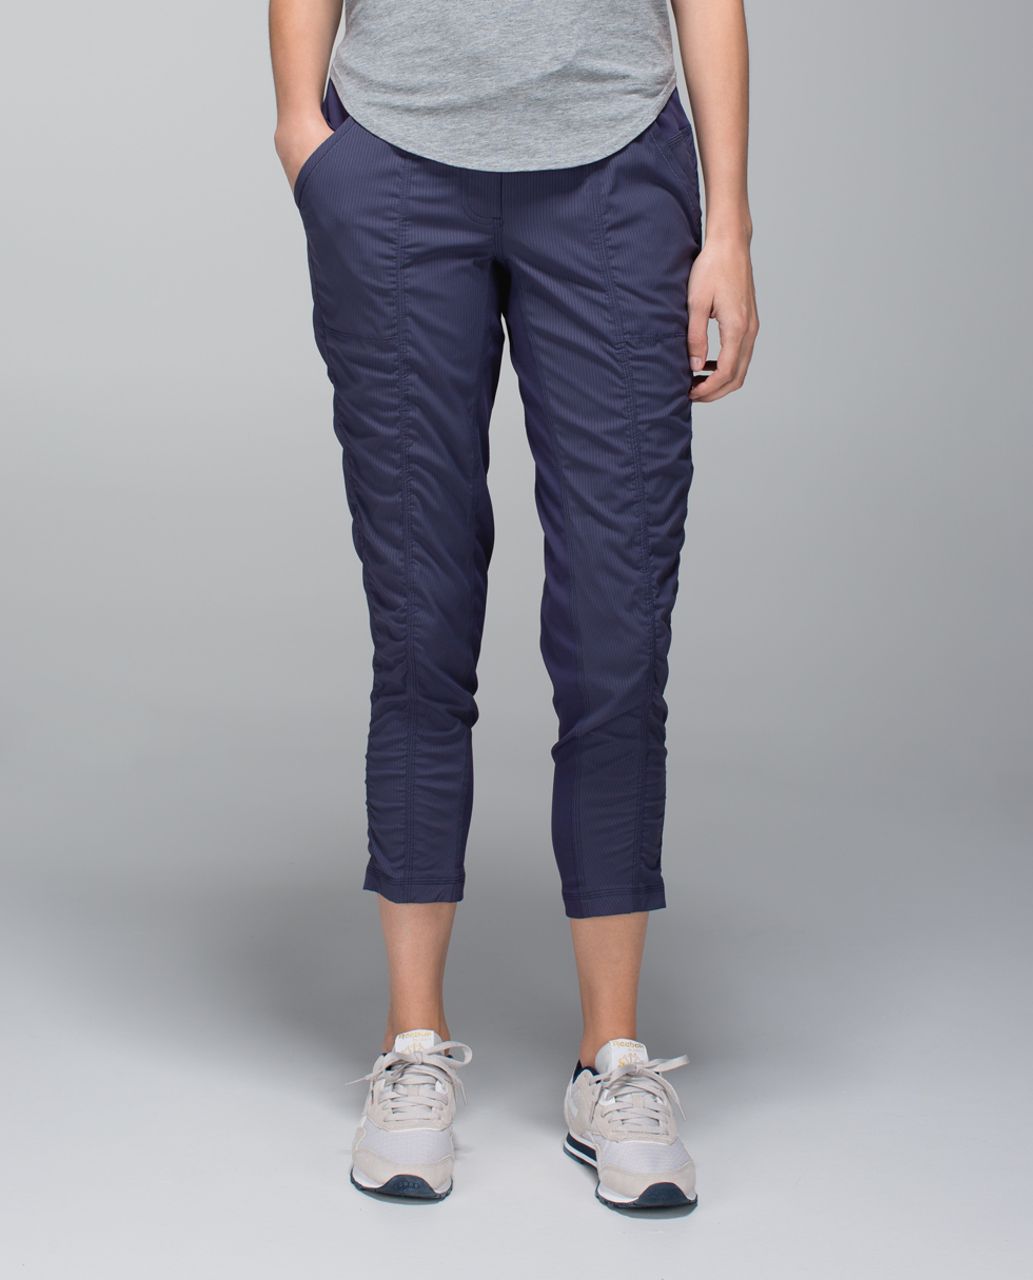 lululemon athletica, Pants & Jumpsuits, Flawed Lululemon Studio Pant Ii 6  Unlinedbeach Blanket Blue Flaw See Desc